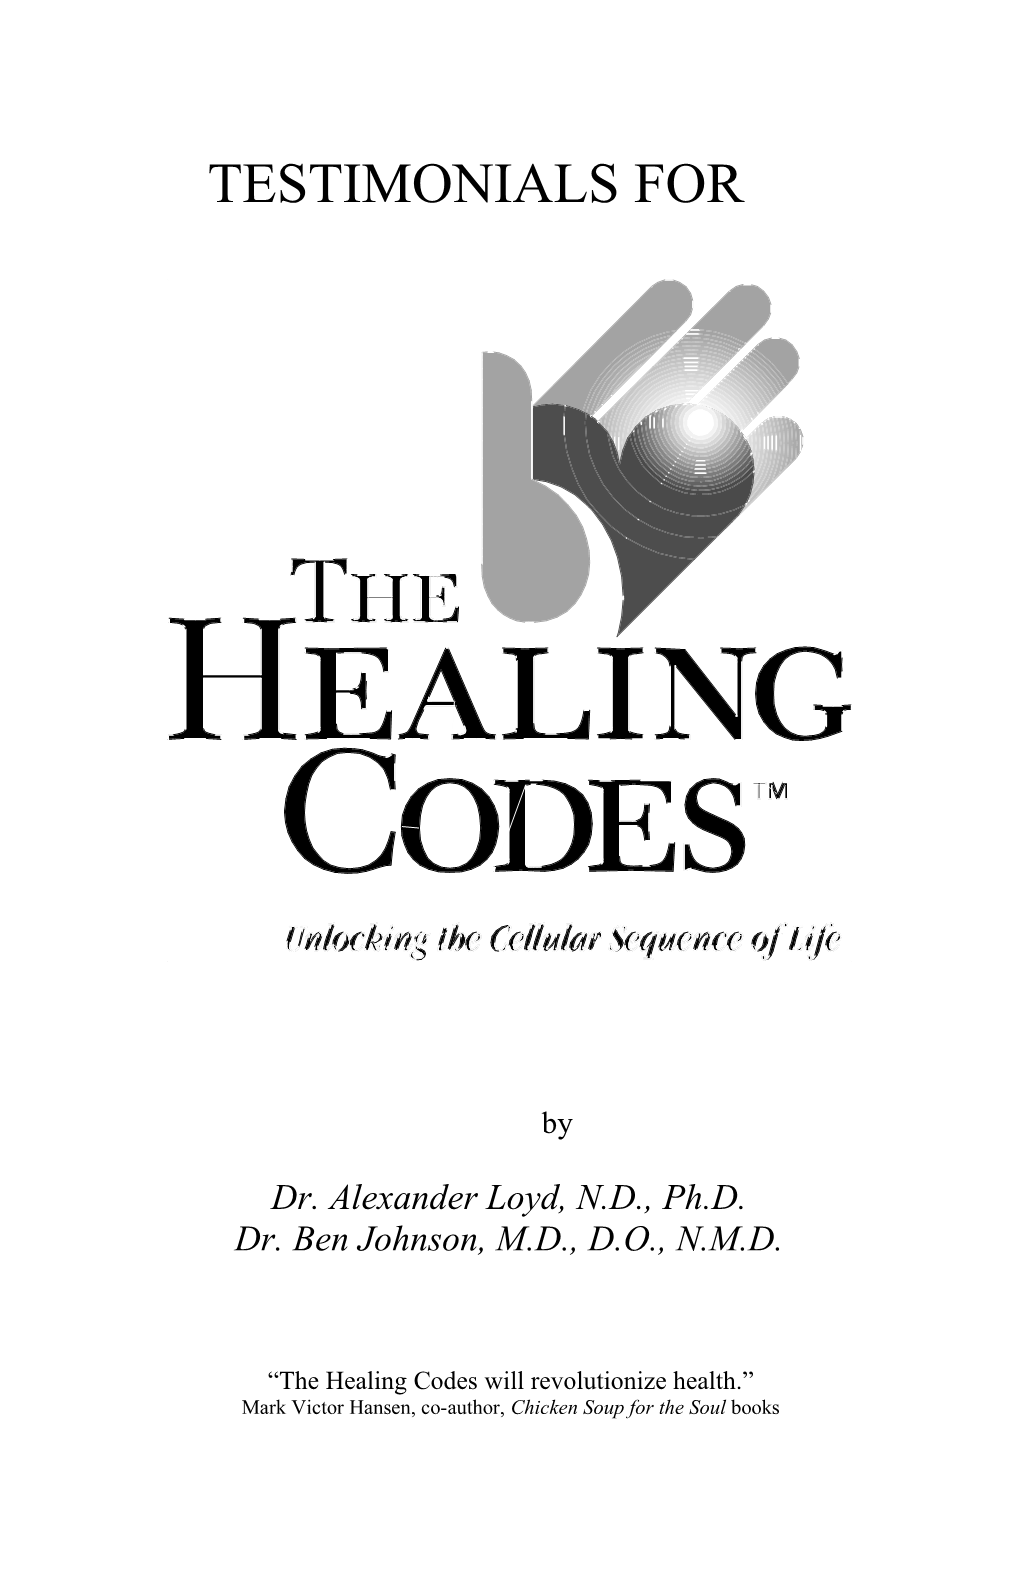 The Healing Codes Will Revolutionize Health